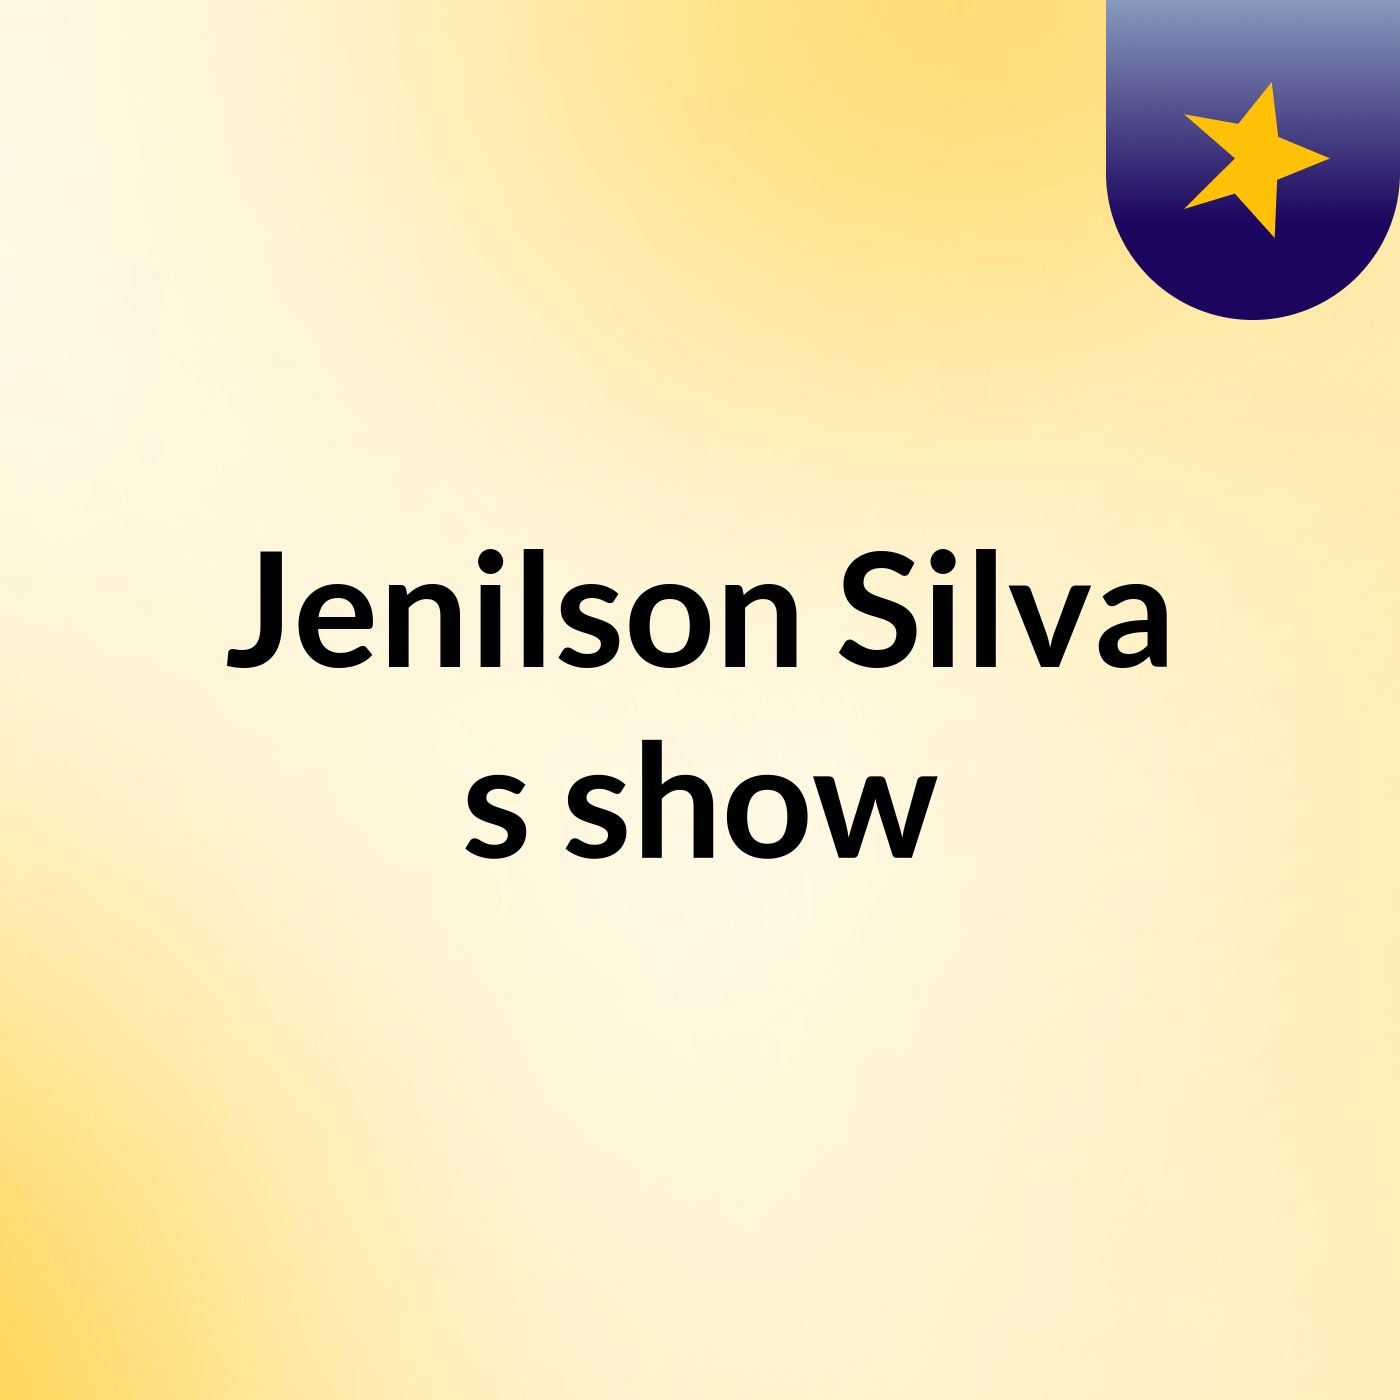 Jenilson Silva's show